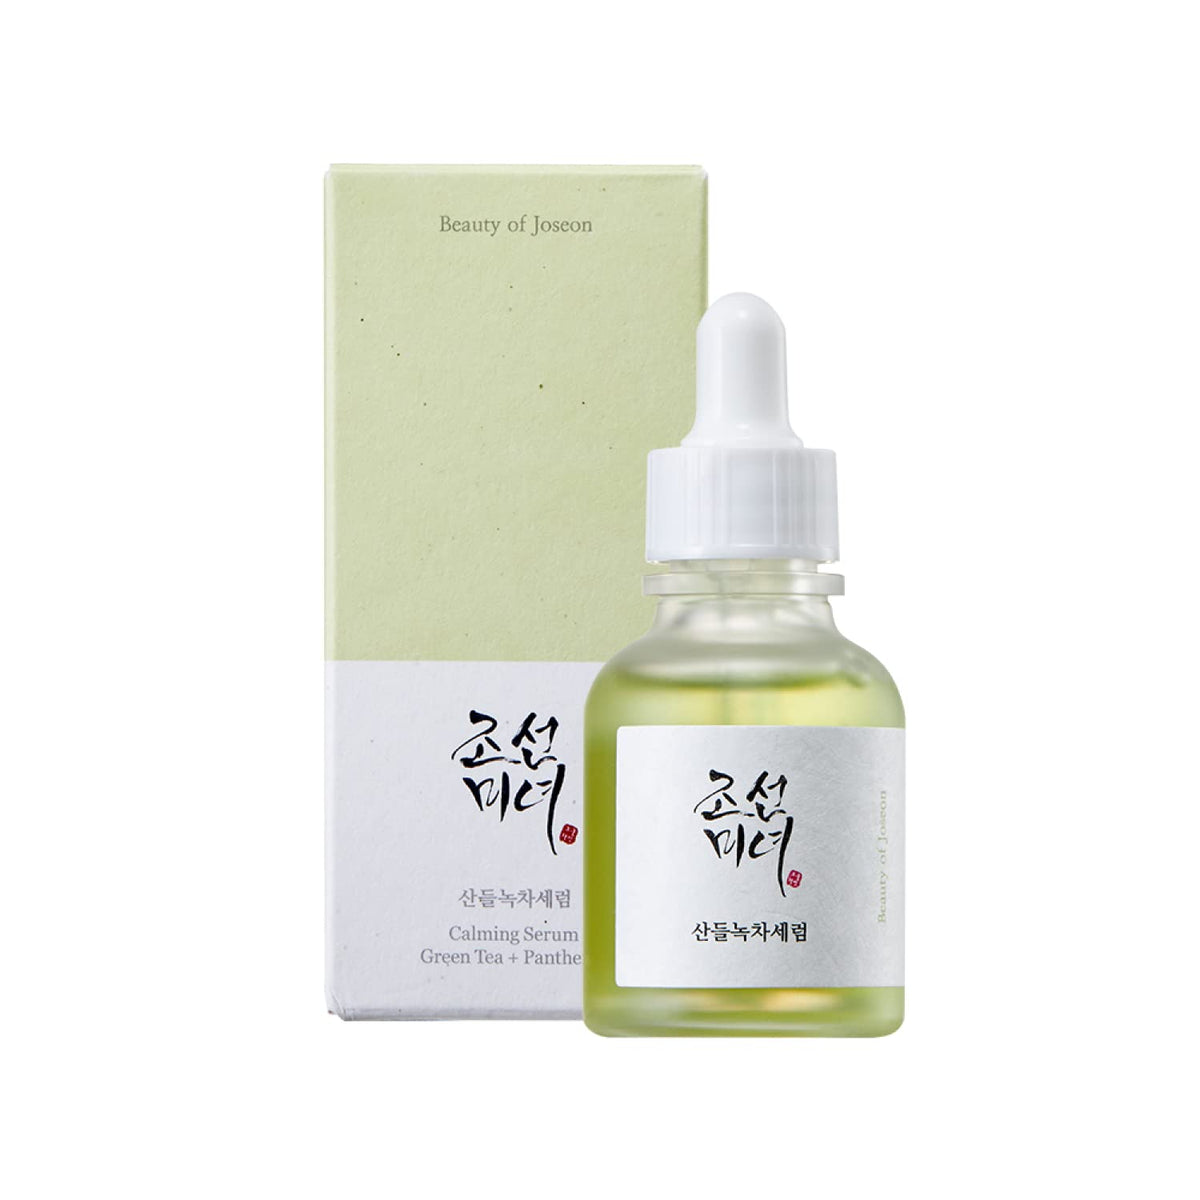 Beauty of Joseon - Calming serum : Green tea + Panthenol 30ml